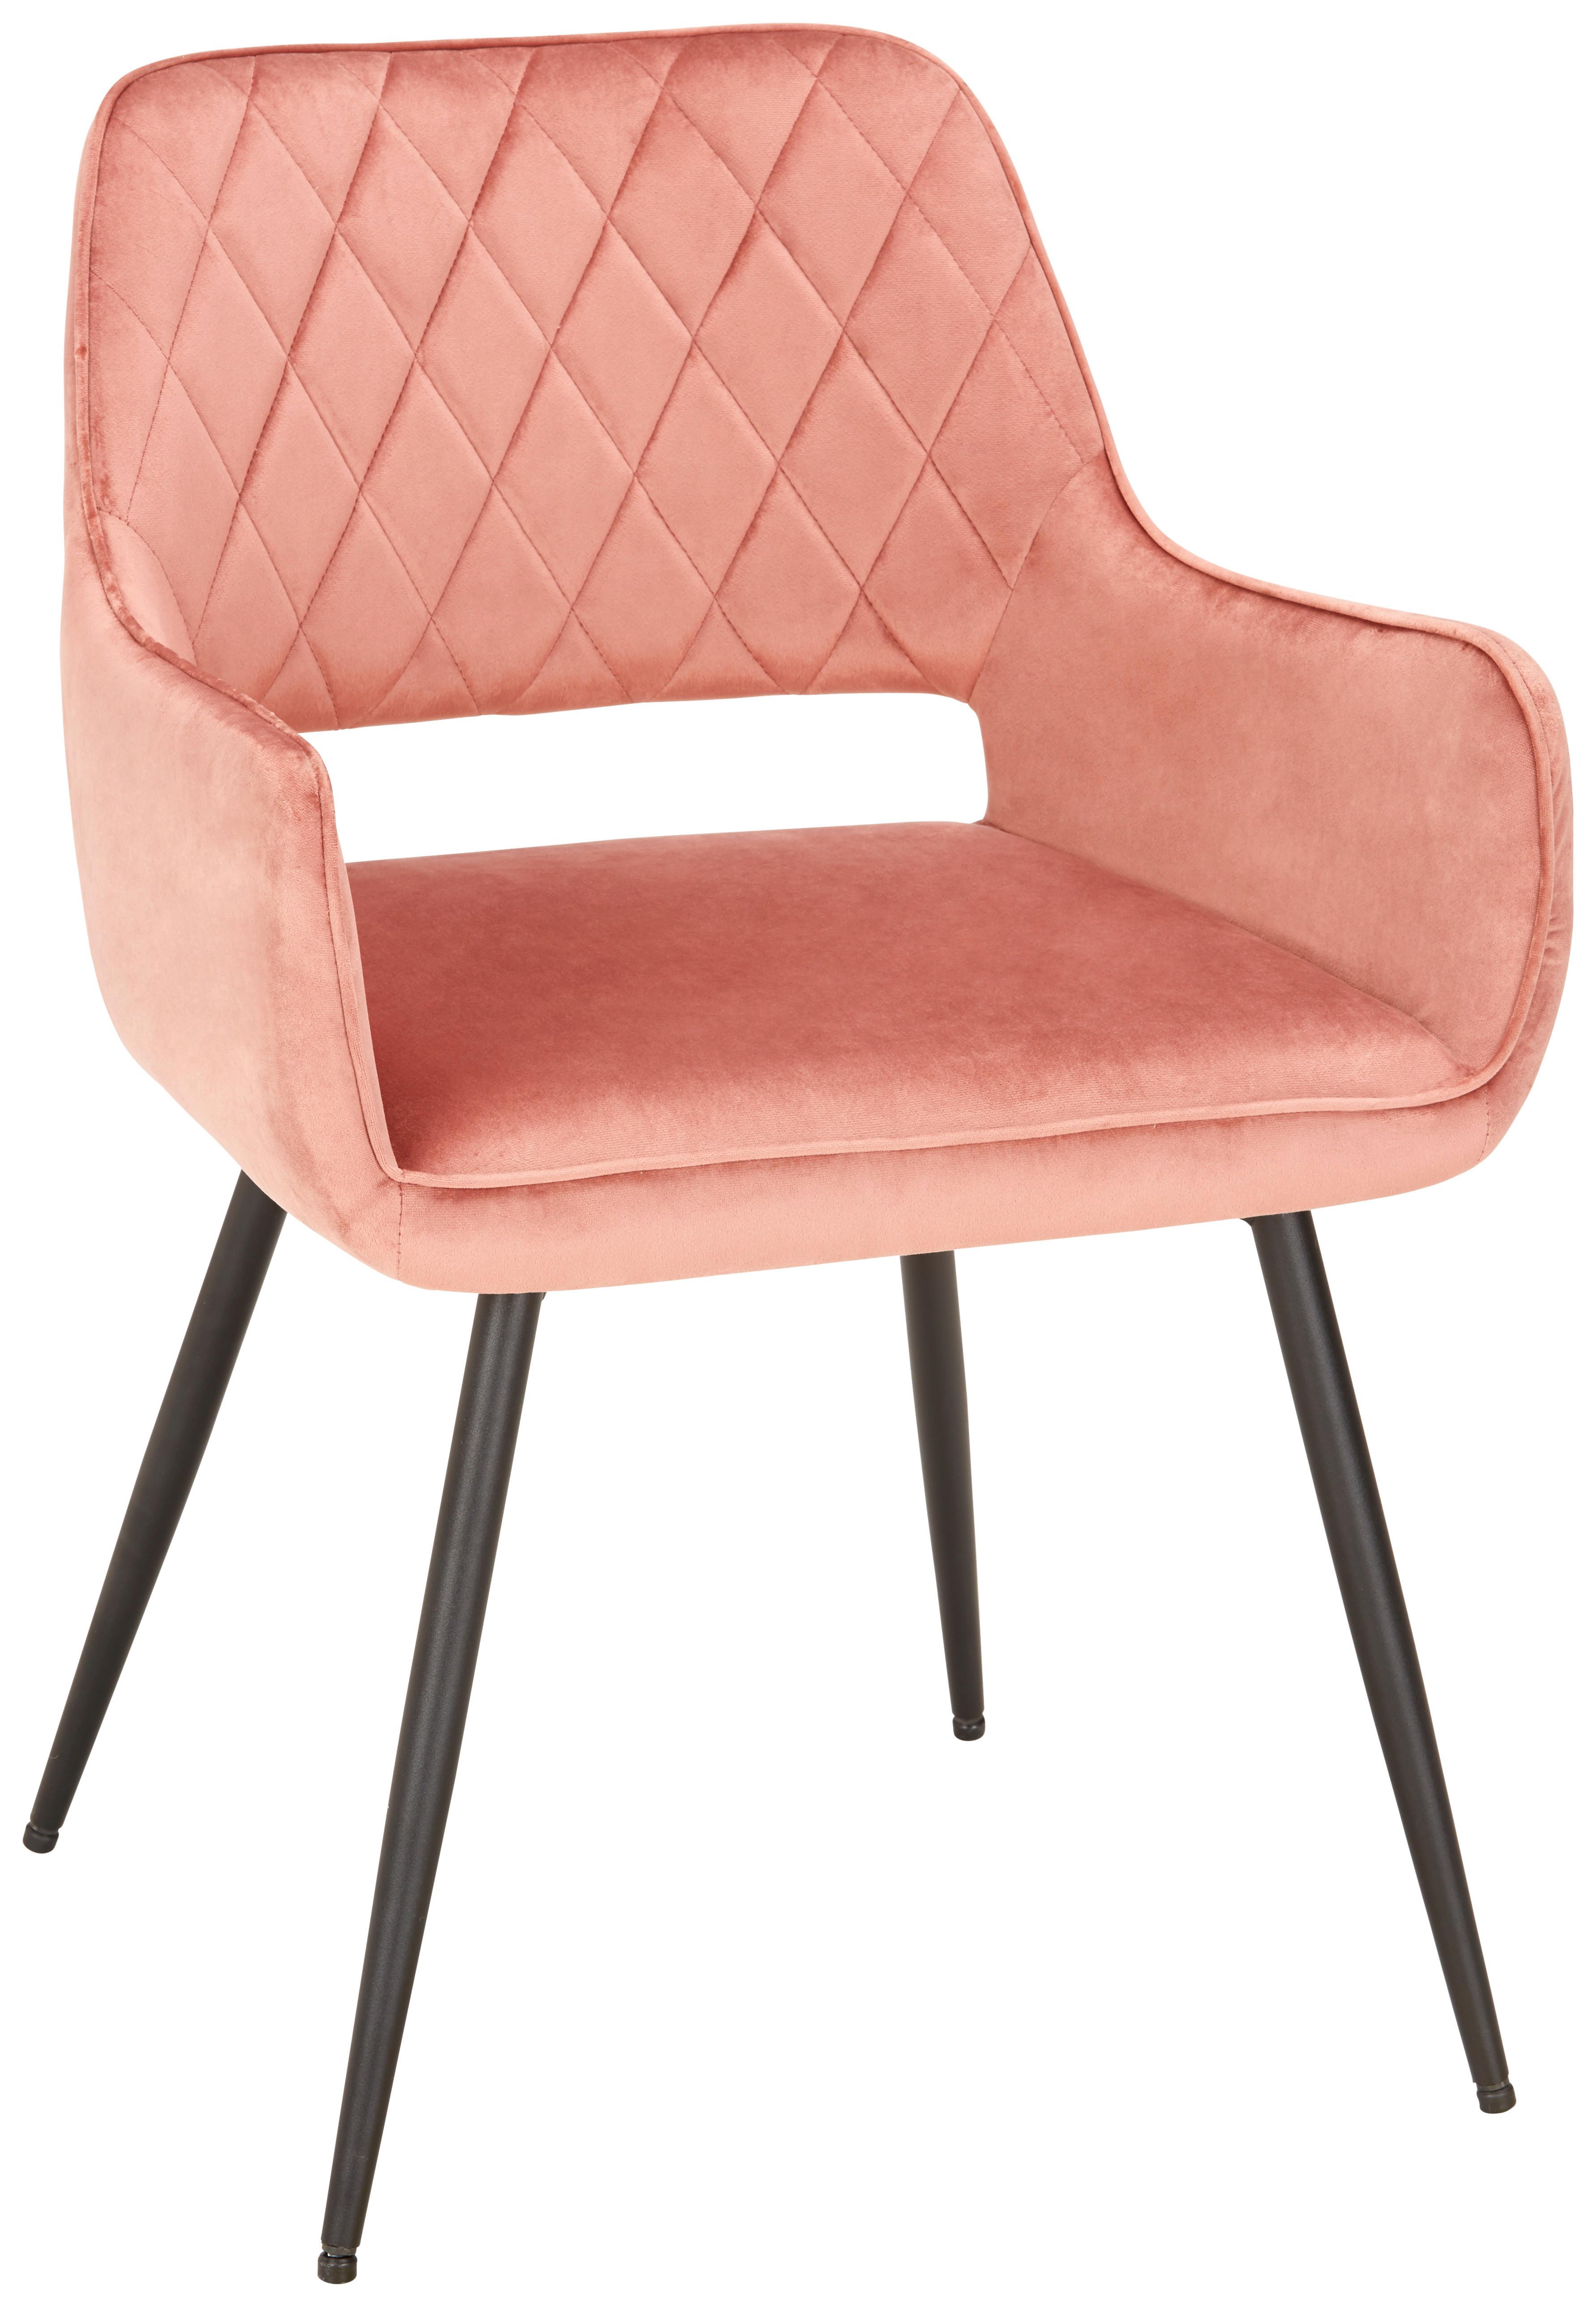 Stuhl in Rosa - Schwarz/Rosa, MODERN, Holz/Textil (55/80,5/59,5cm) - Based